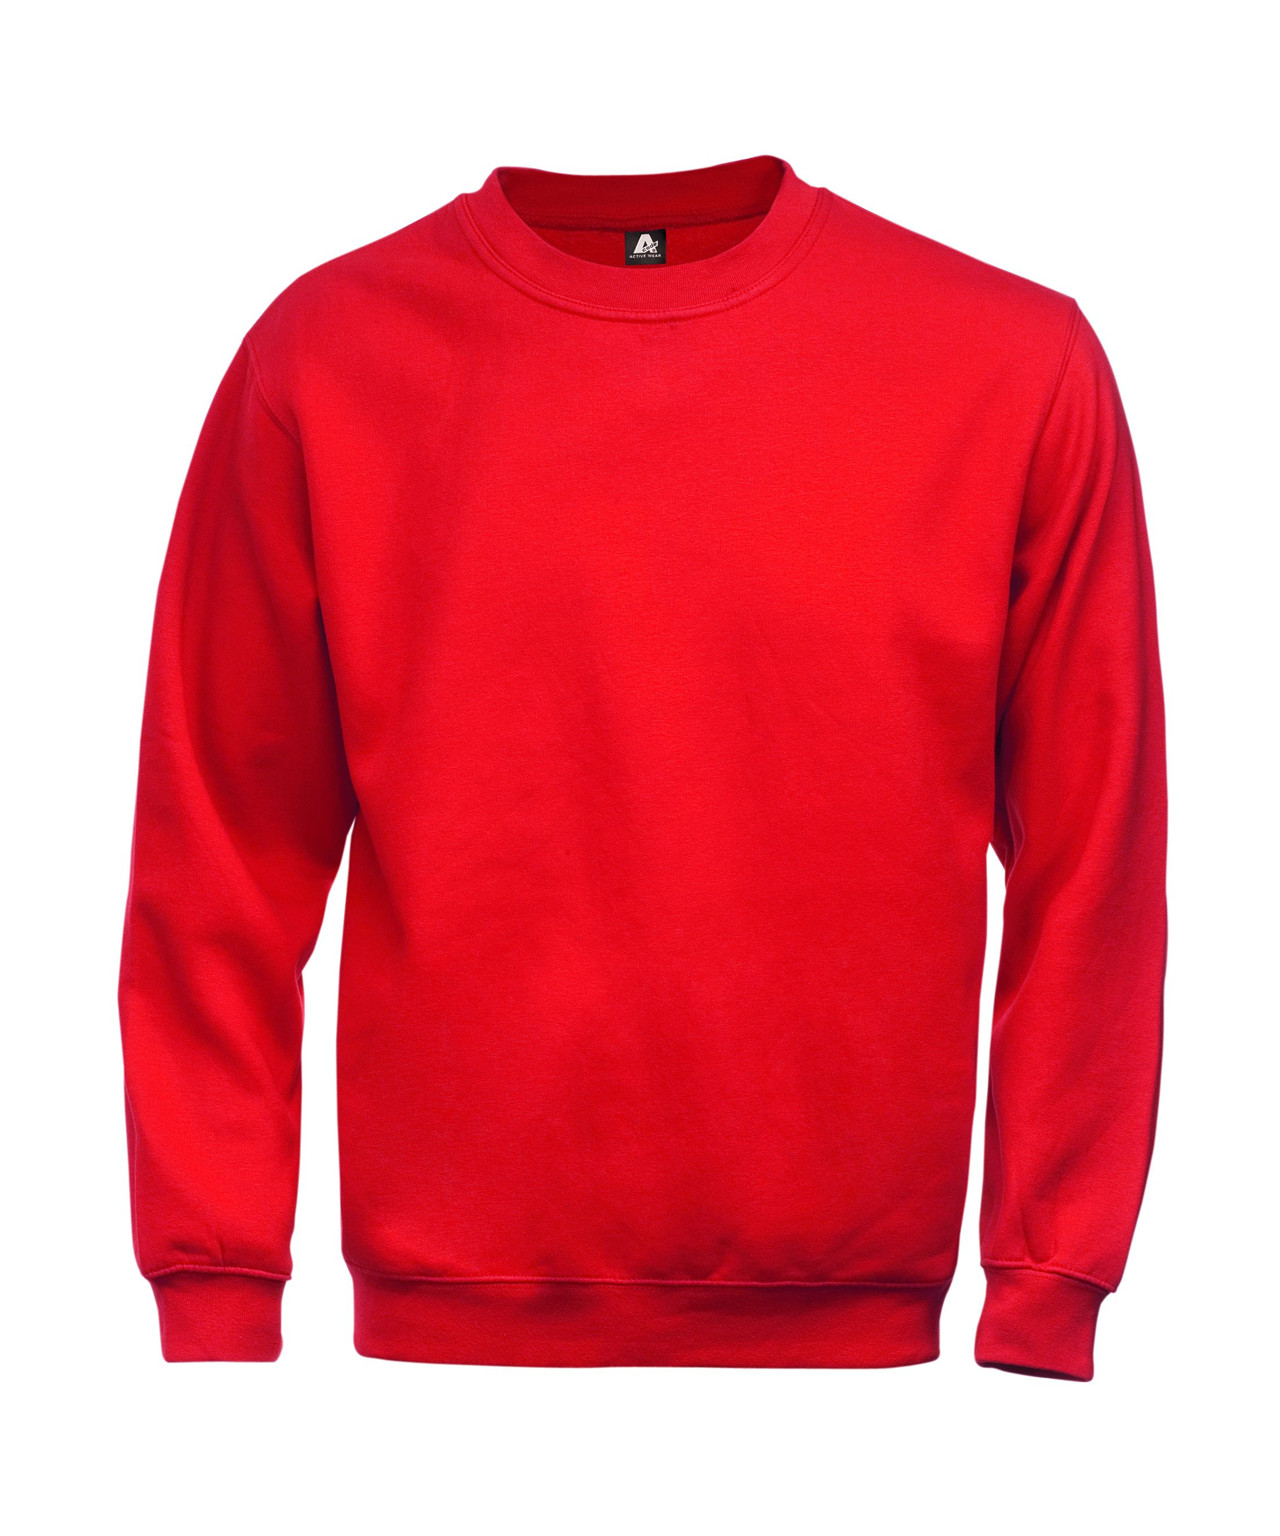 Se Kansas/Fristads A-Code klassisk sweatshirt (Rød, 4XL) hos Specialbutikken